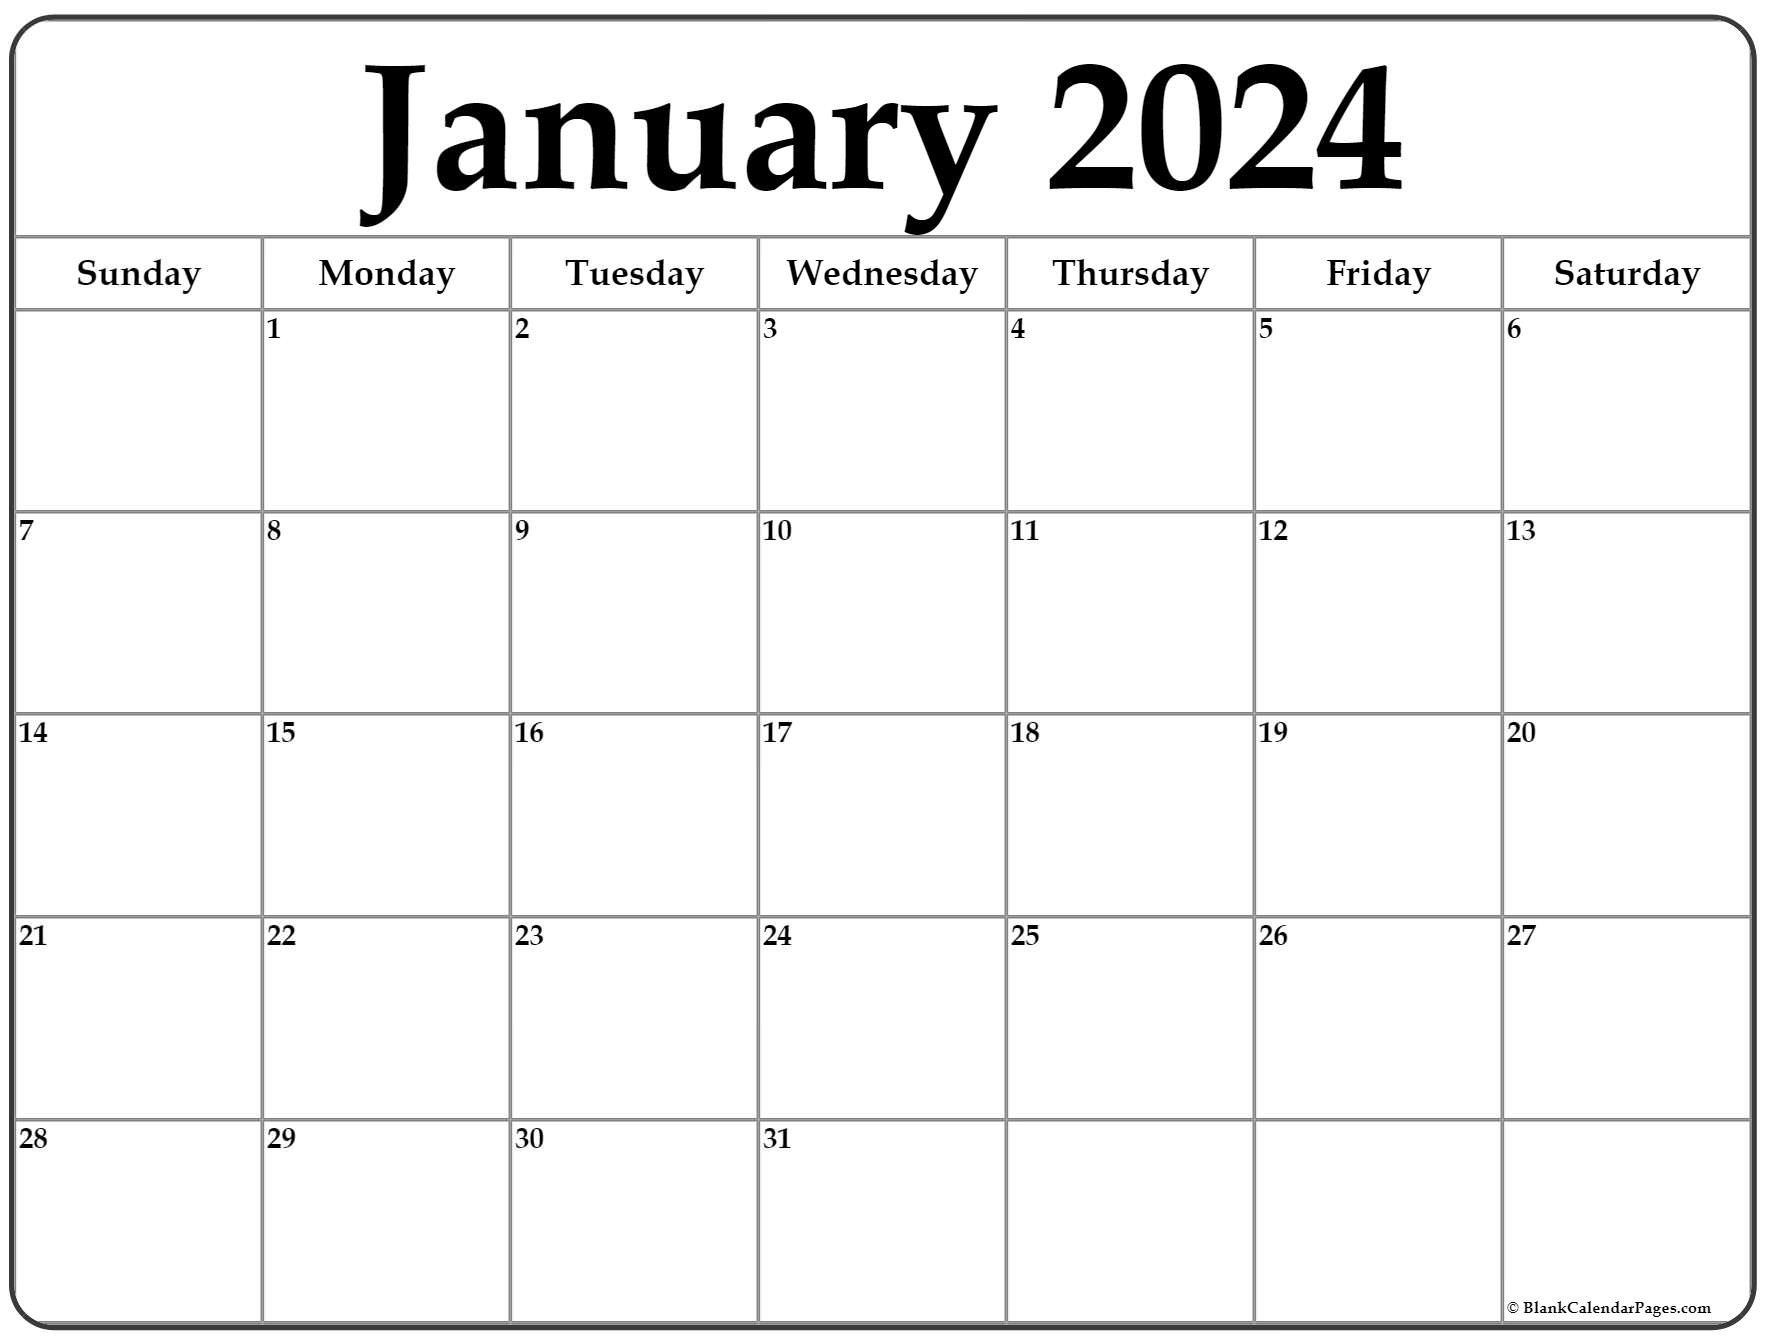 January 2024 Calendar | Free Printable Calendar throughout Free Printable Blank 2024 Monthly Calendar